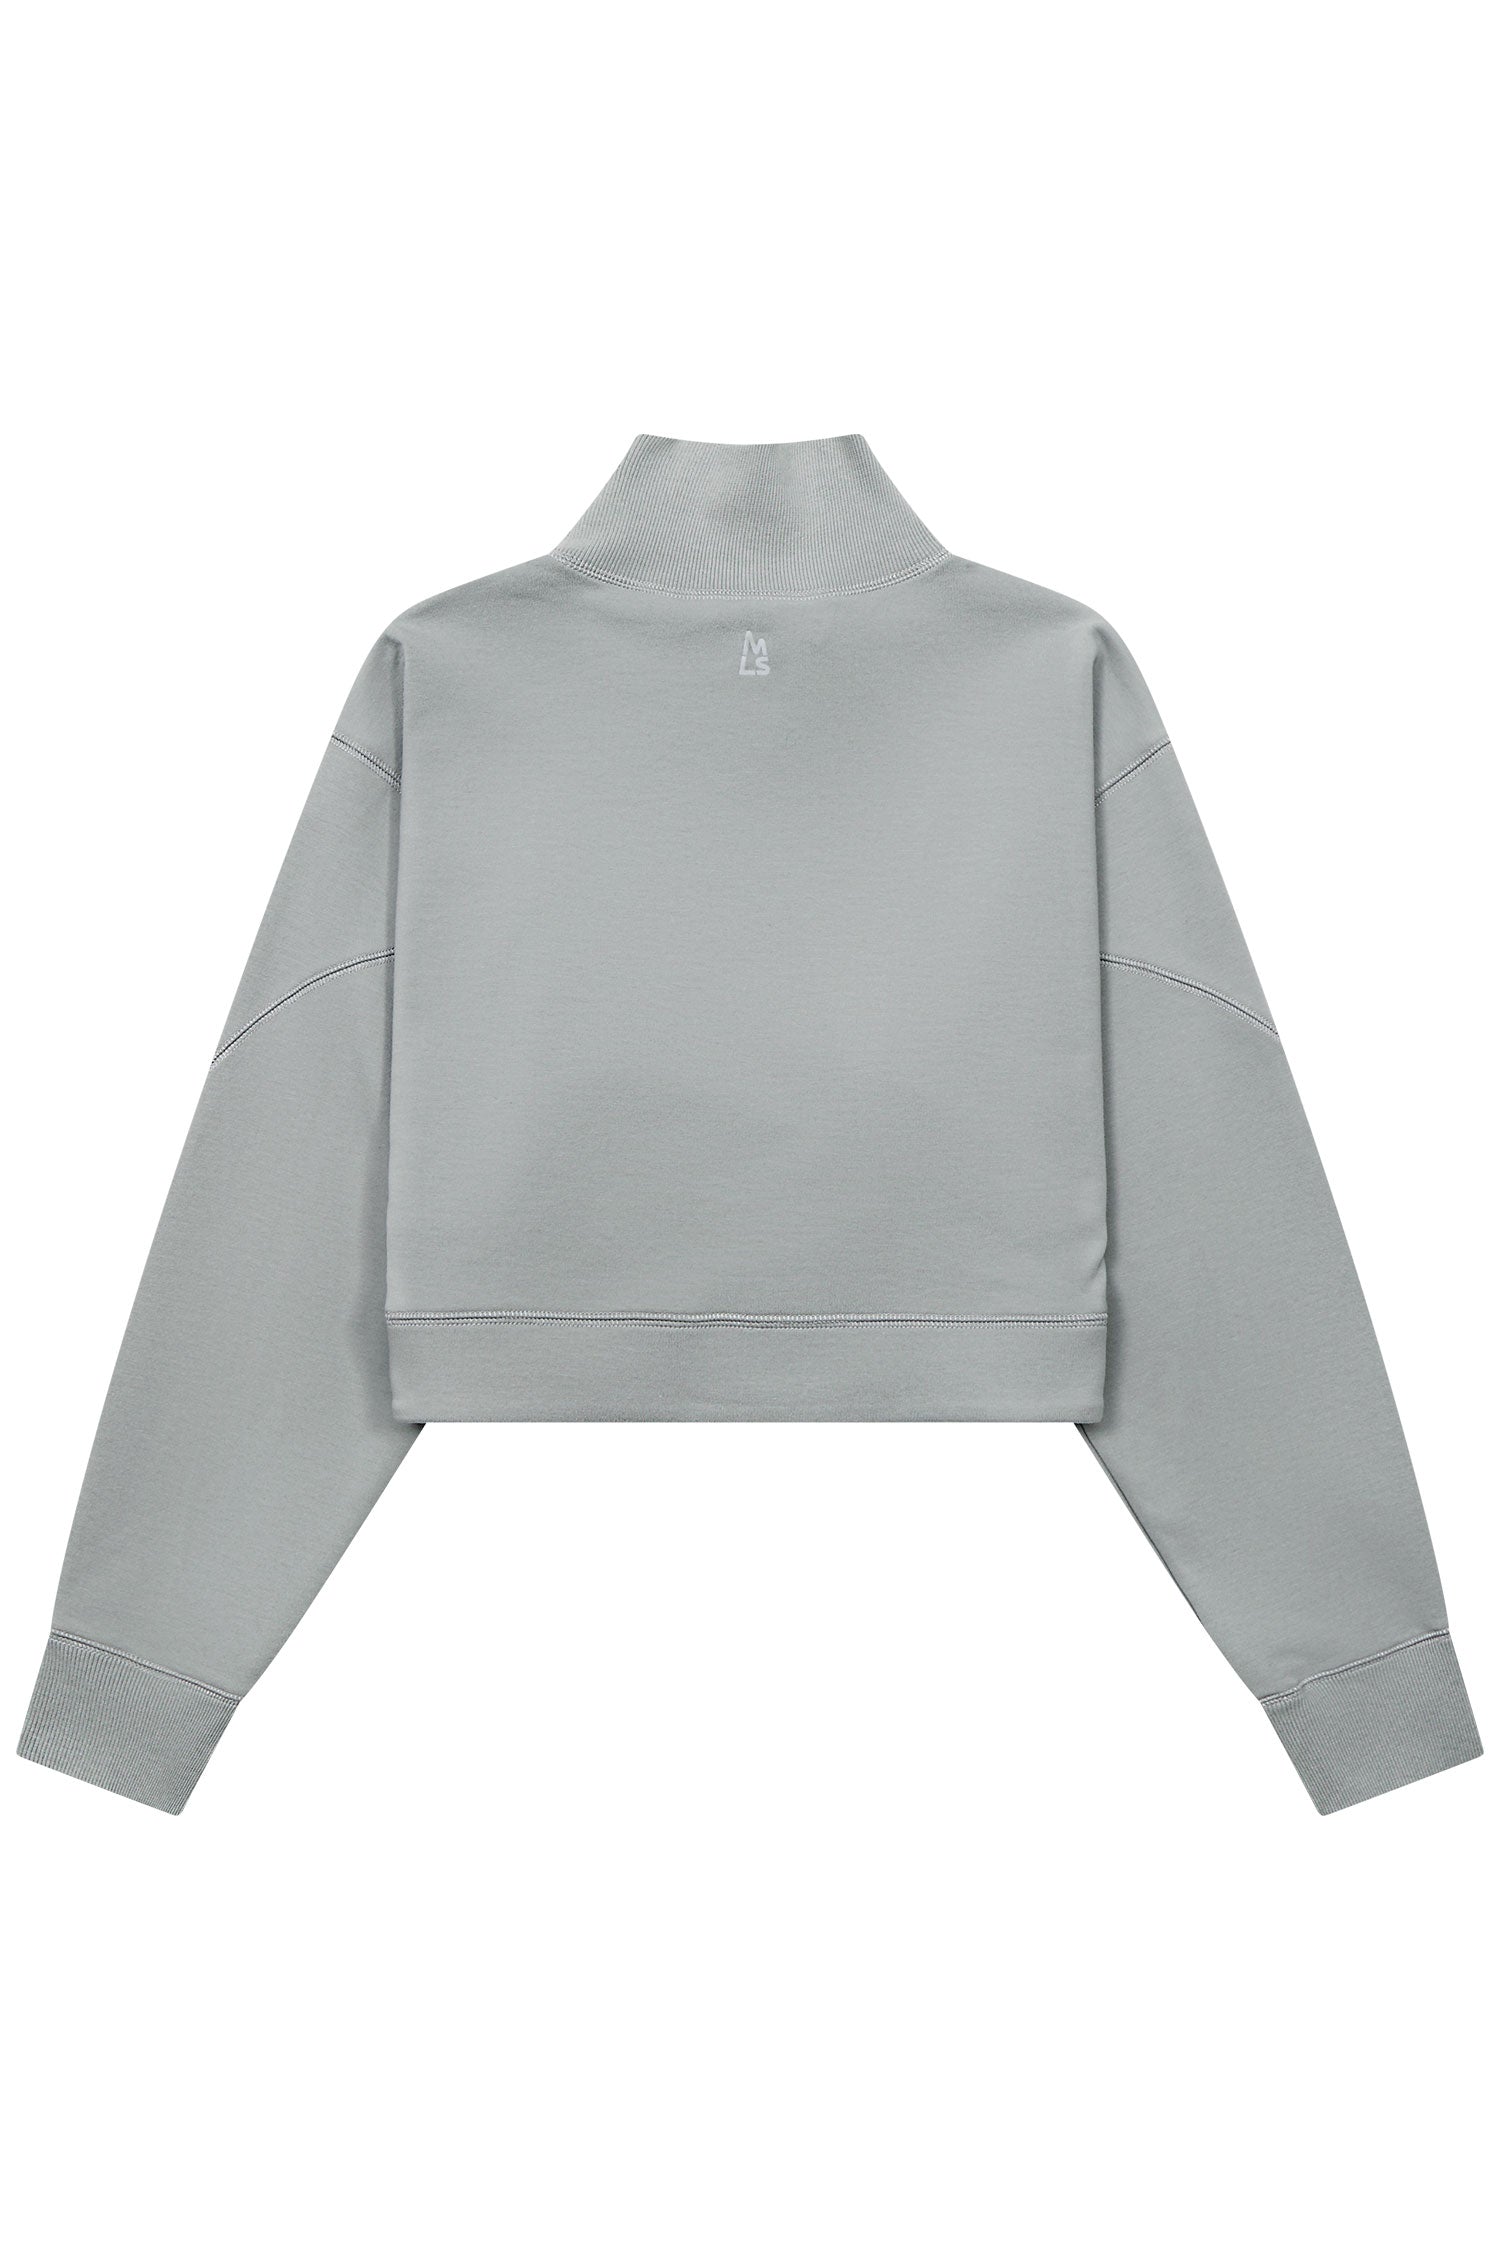 Mira Articulated Cropped Sweatshirt